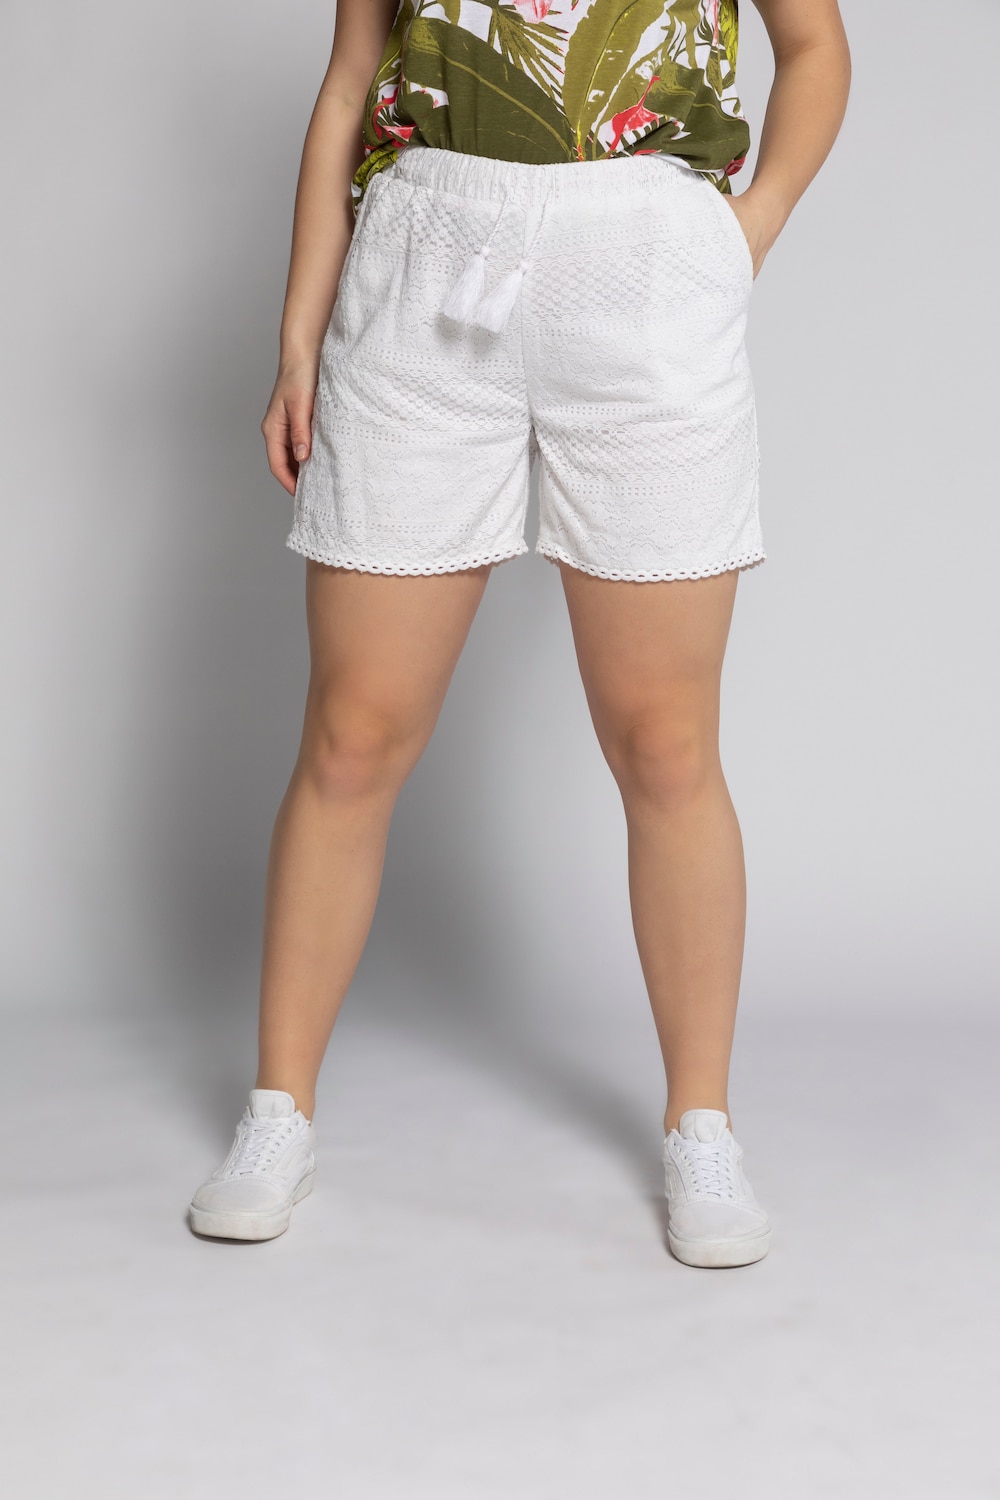 Grote Maten shorts, Dames, wit, Maat: 48, Polyester, Studio Untold